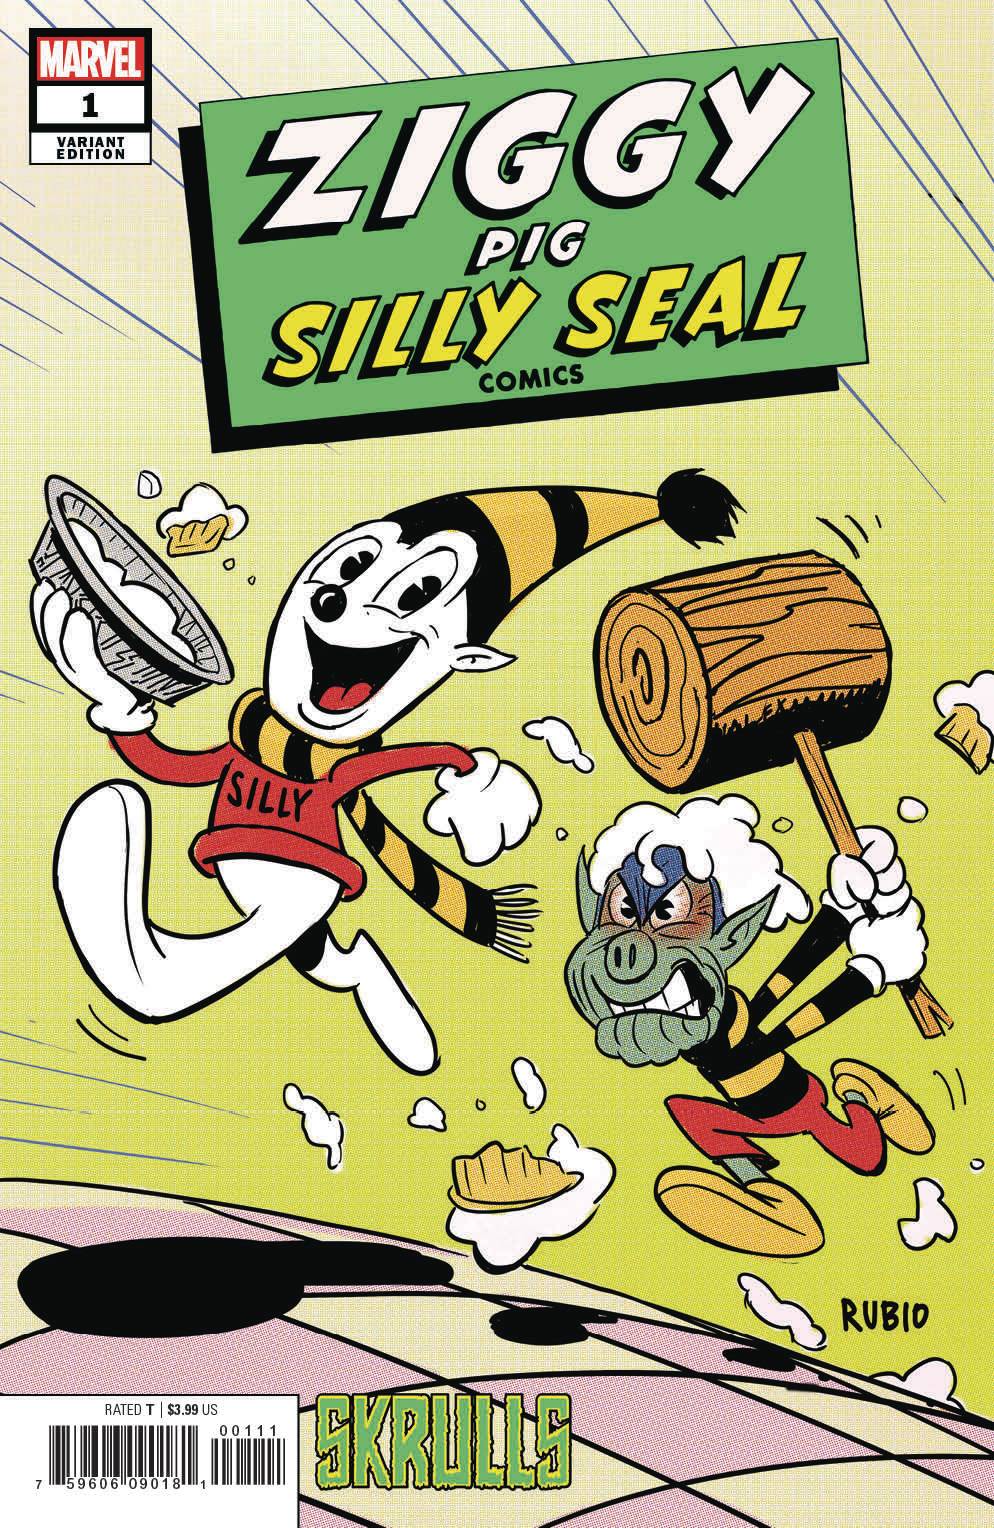 03/06/2019 ZIGGY PIG SILLY SEAL COMICS #1 RUBIO SKRULLS VAR